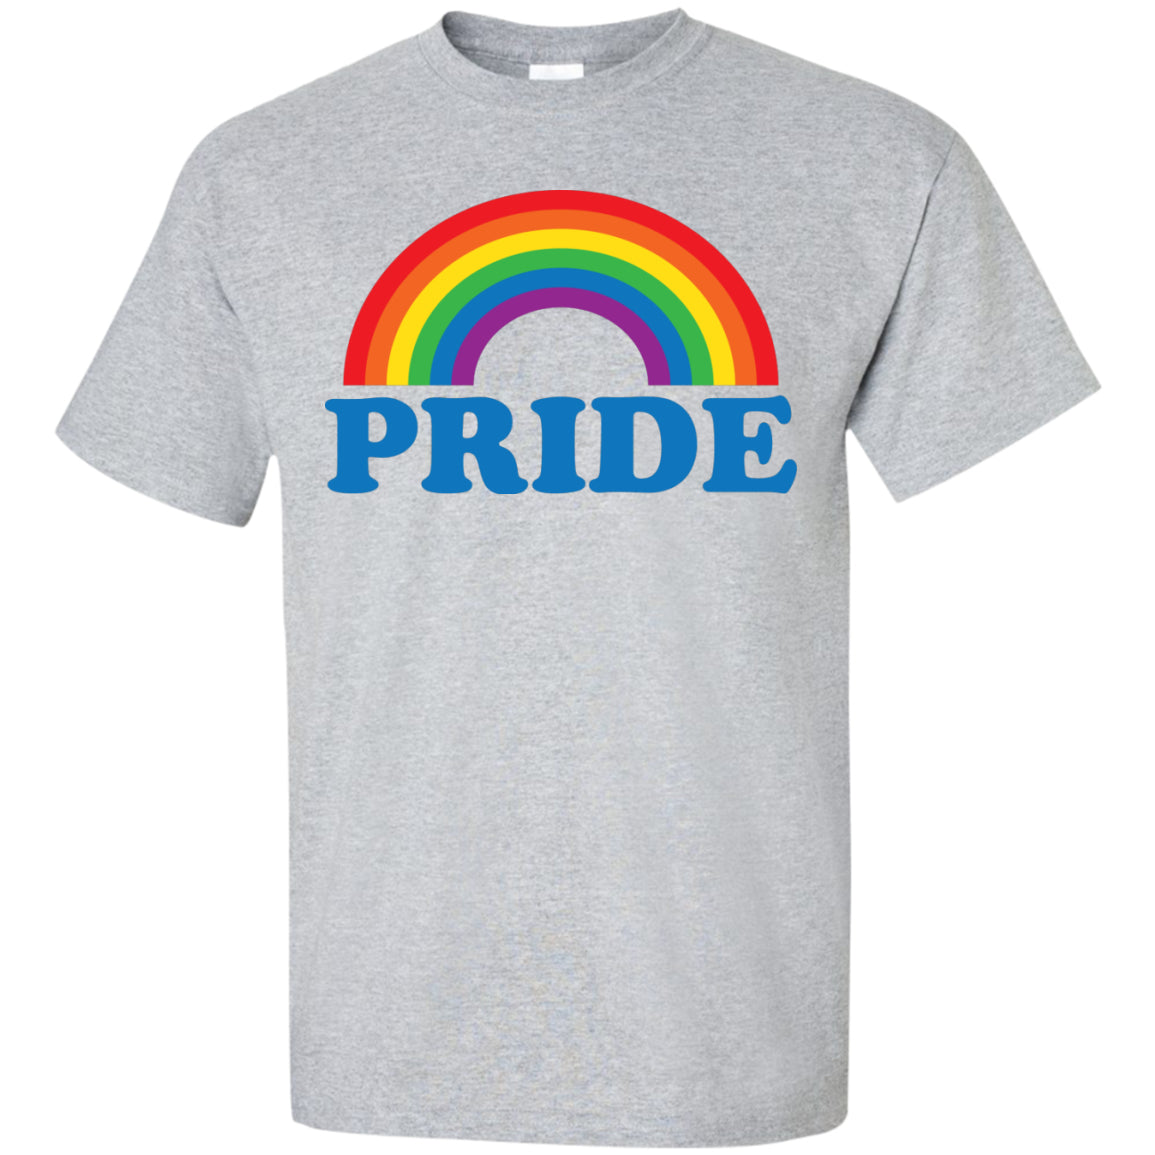 rainbow shirt meaning